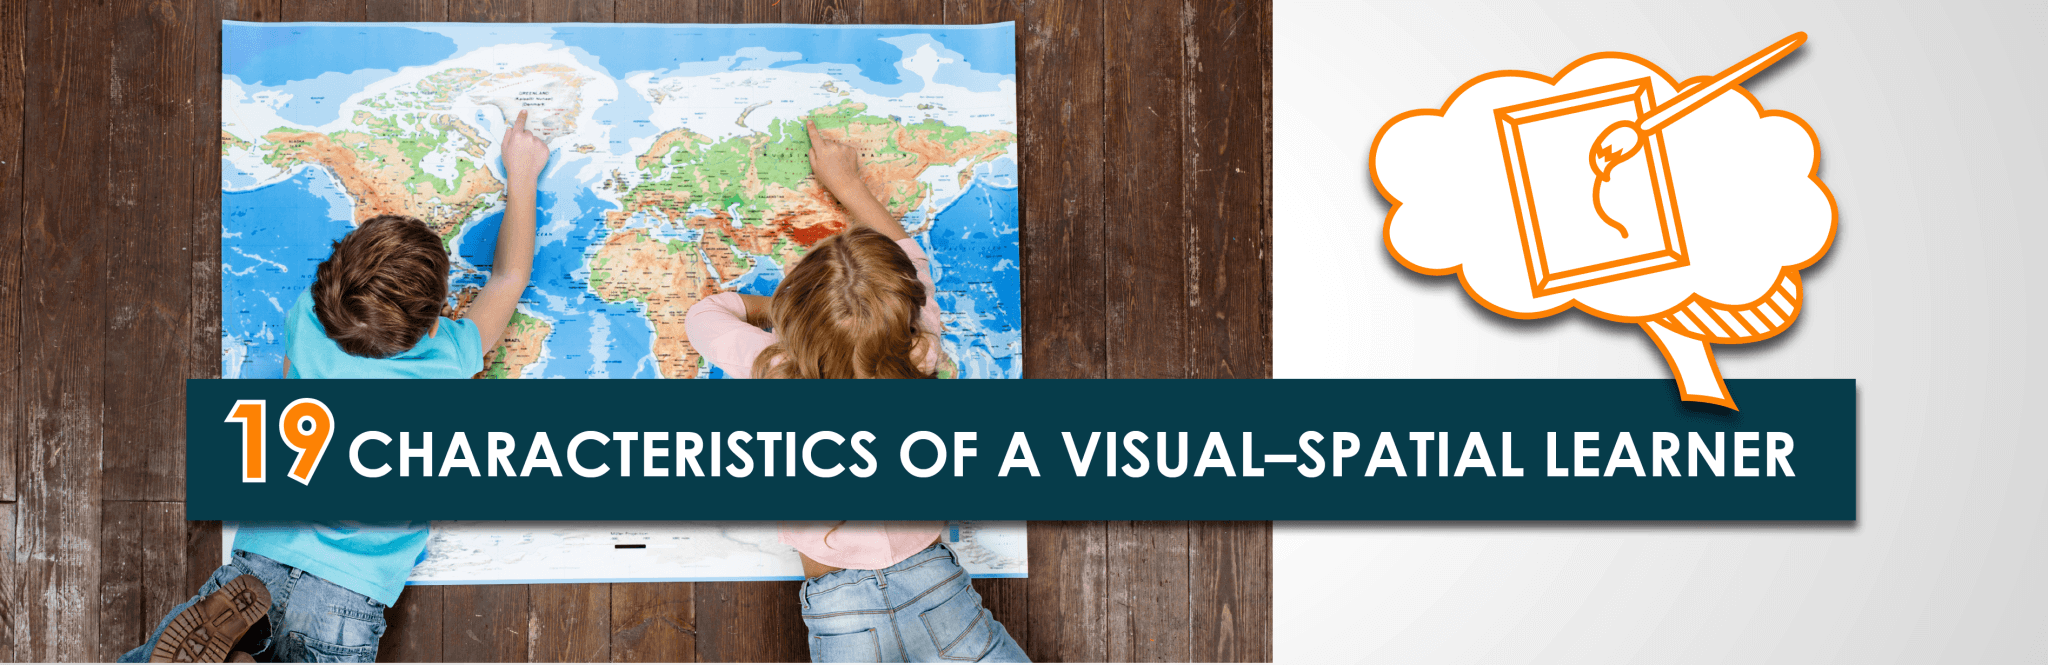 19 Characteristics of a Visual-Spatial Learner